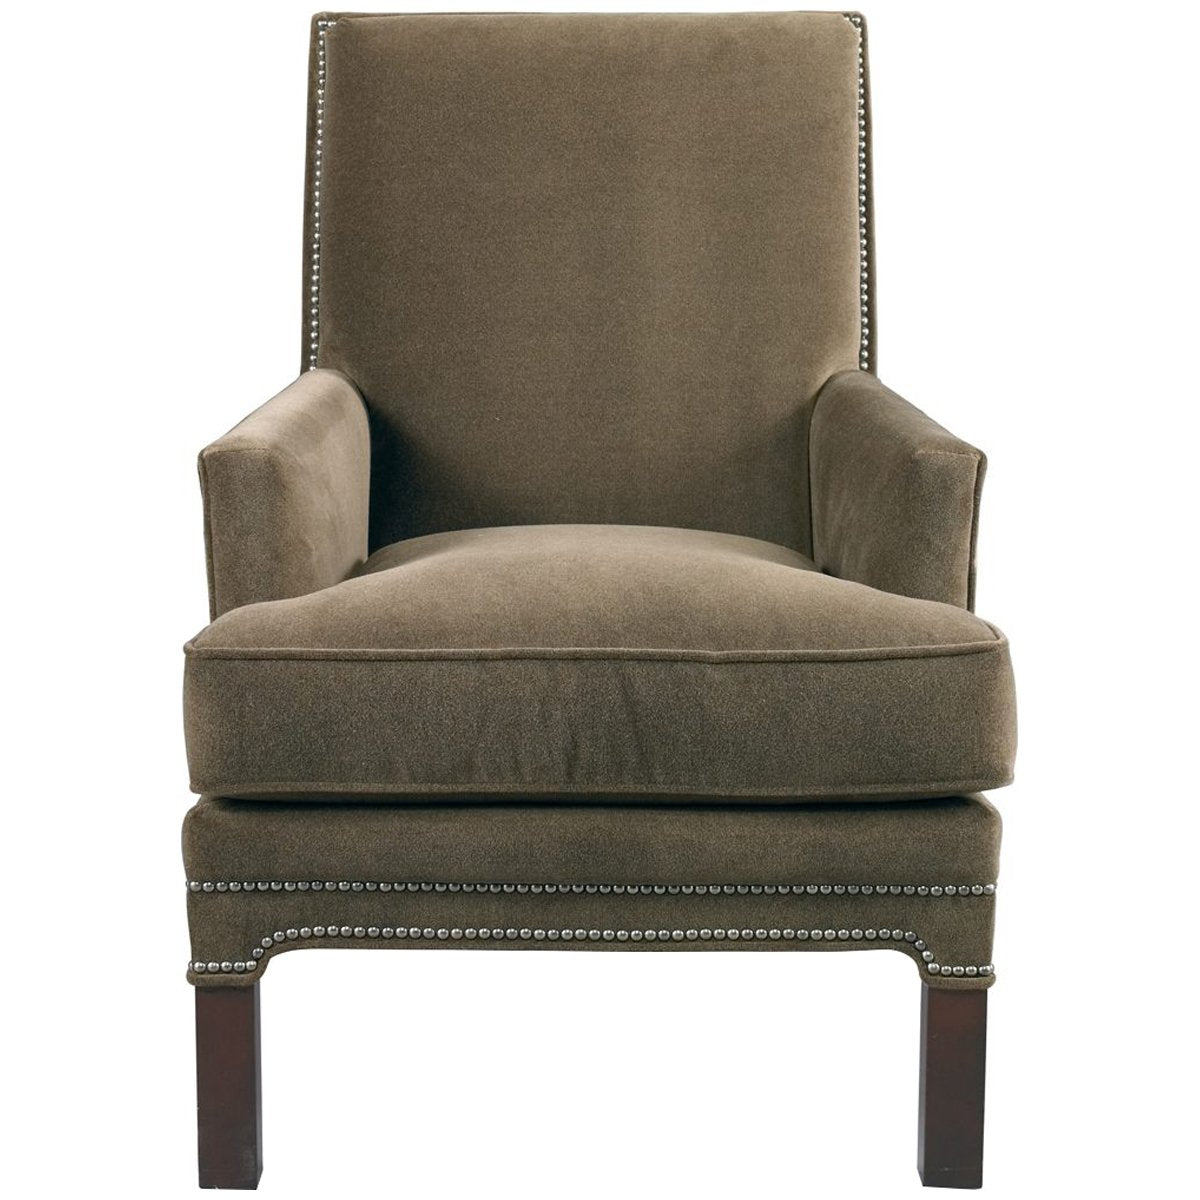 Hickory White Vineyard Arm Chair